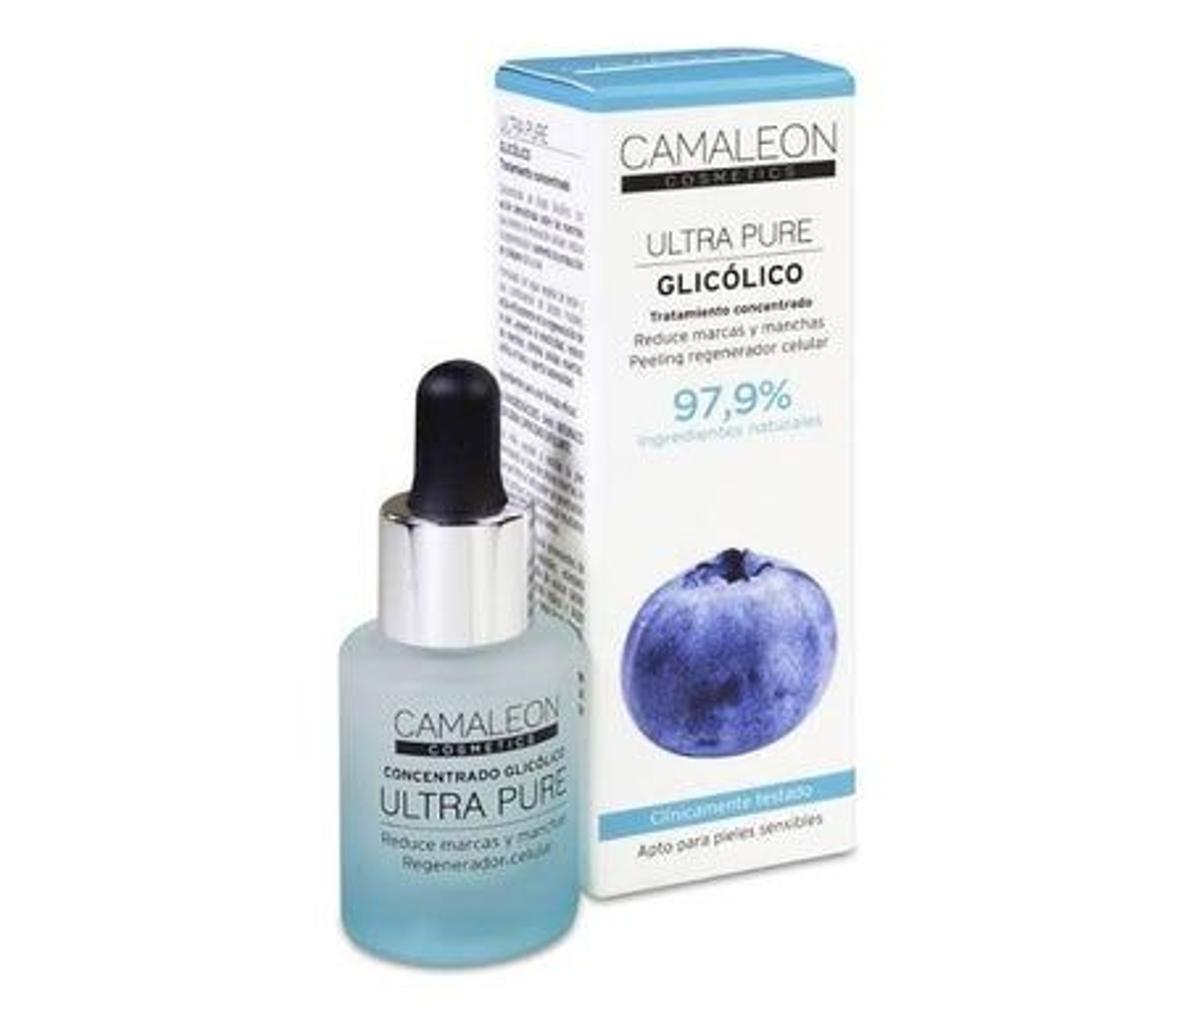 Camaleon Cosmetics Ultra Pure Concentrado Glicólico